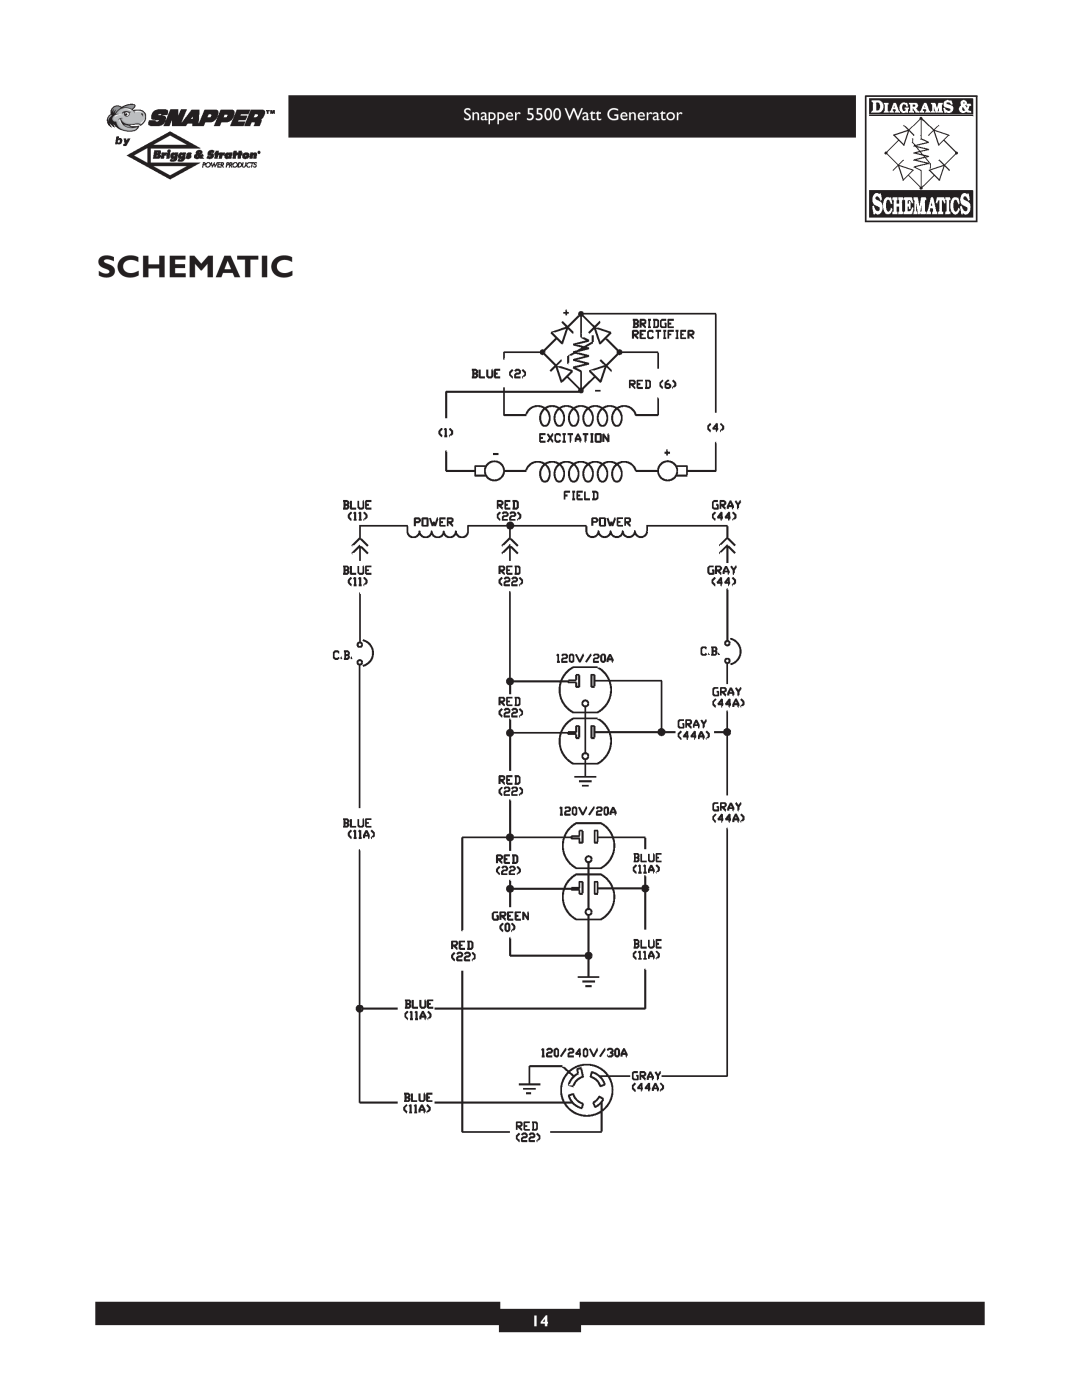 Snapper 1668-0 owner manual Schematic, Snapper 5500 Watt Generator 